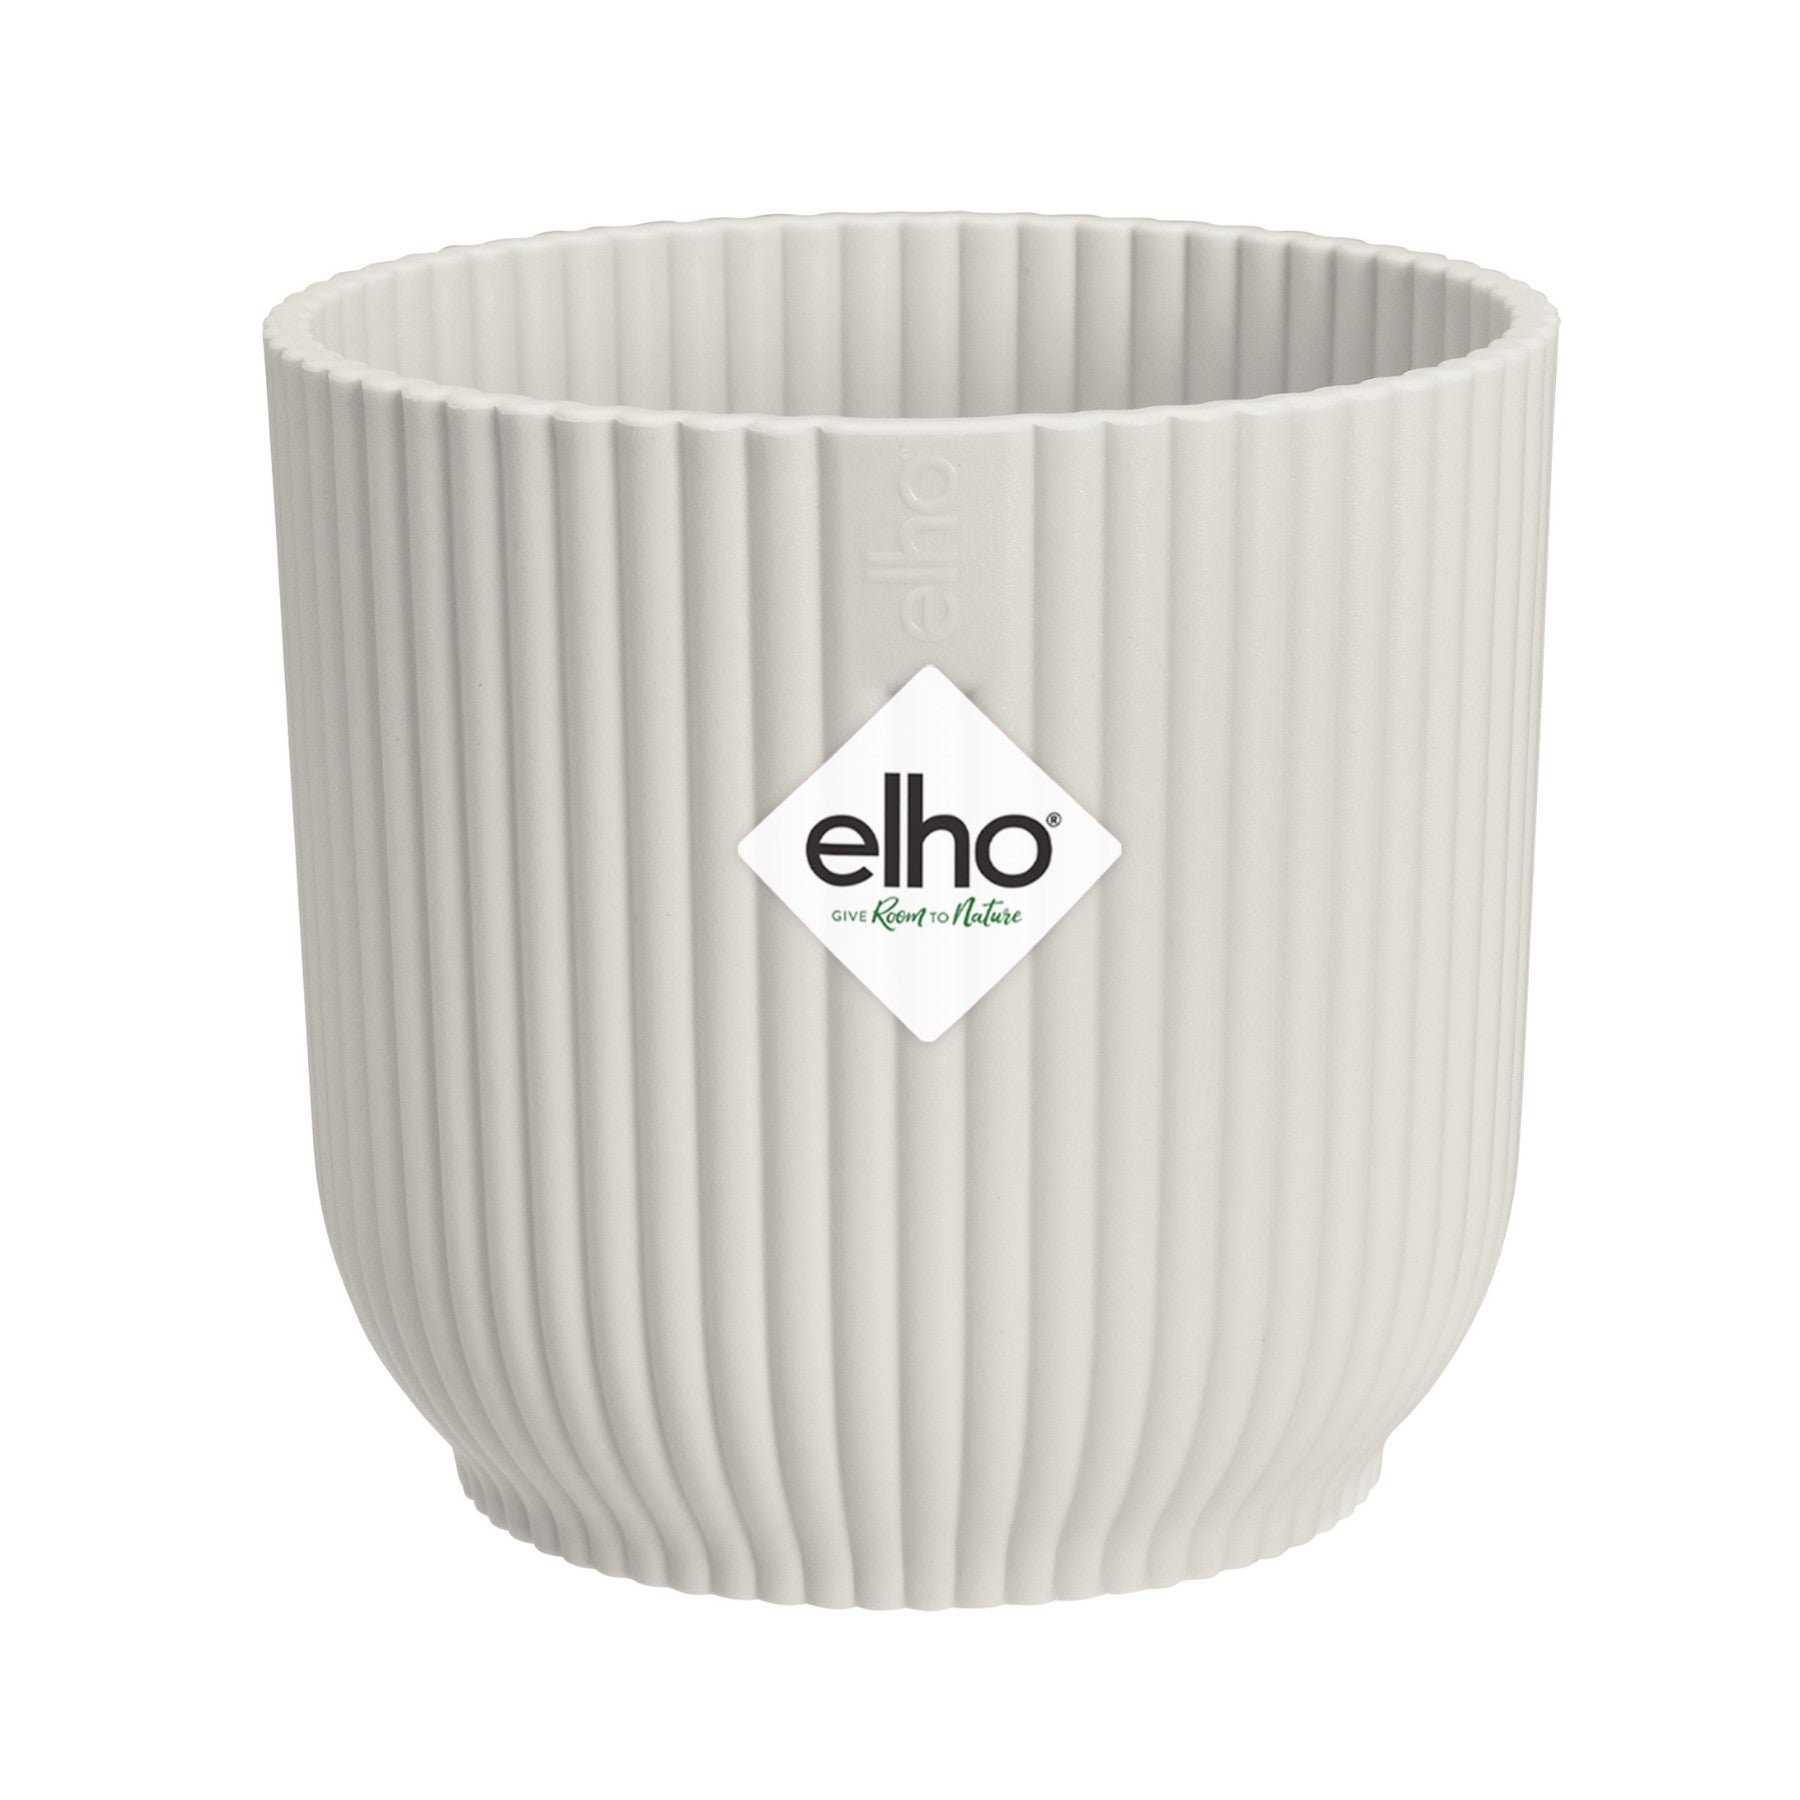 White Elho brand ribbed design plastic plant pot with logo on white background